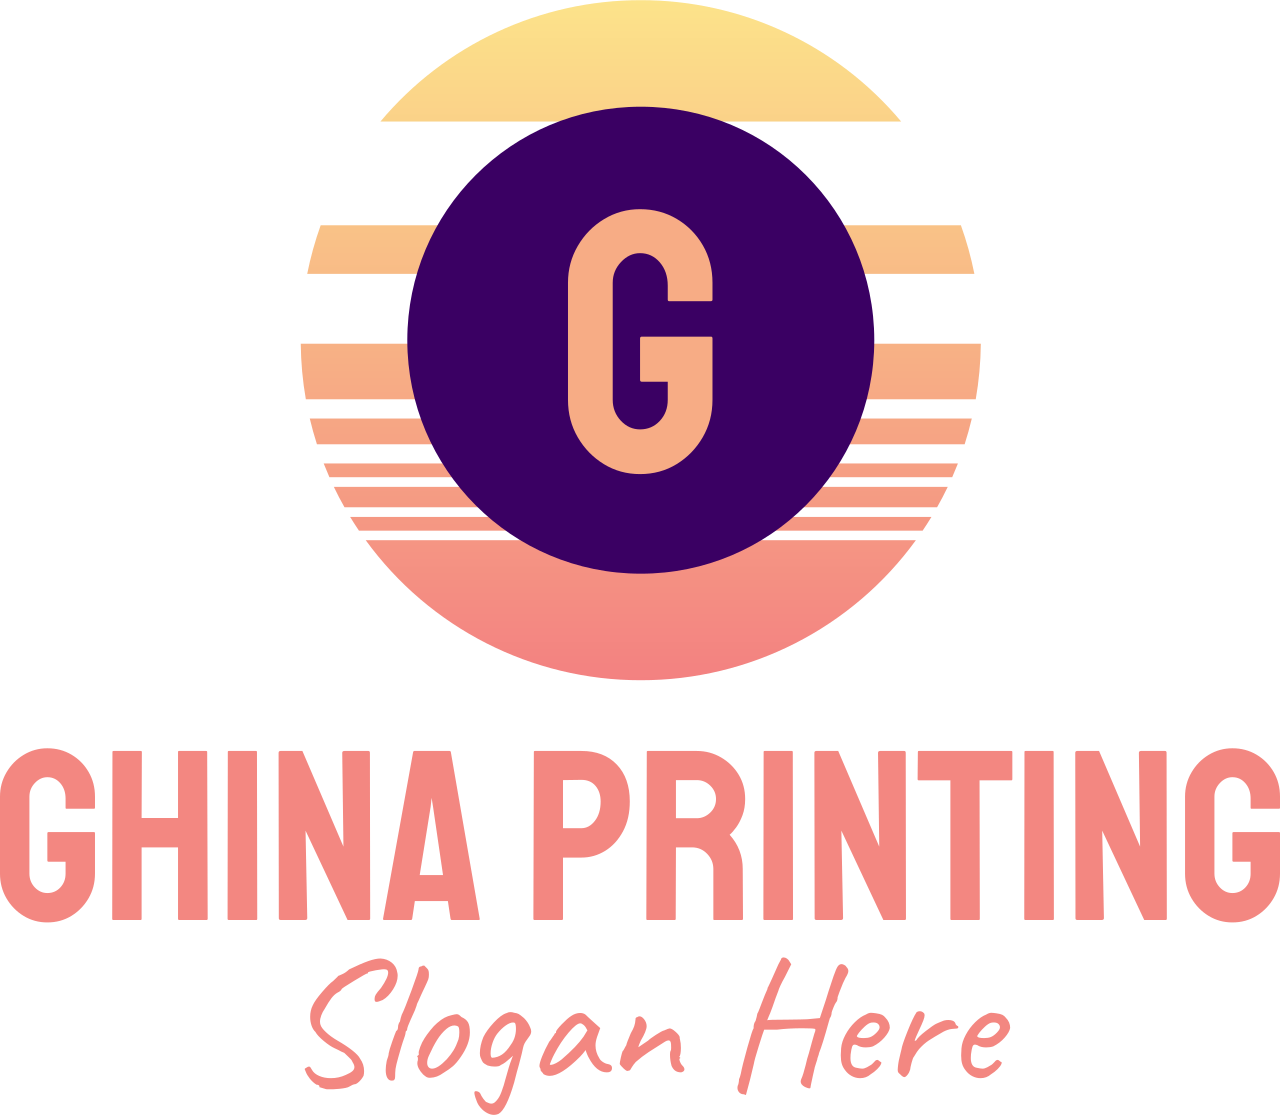 Ghina printing's logo